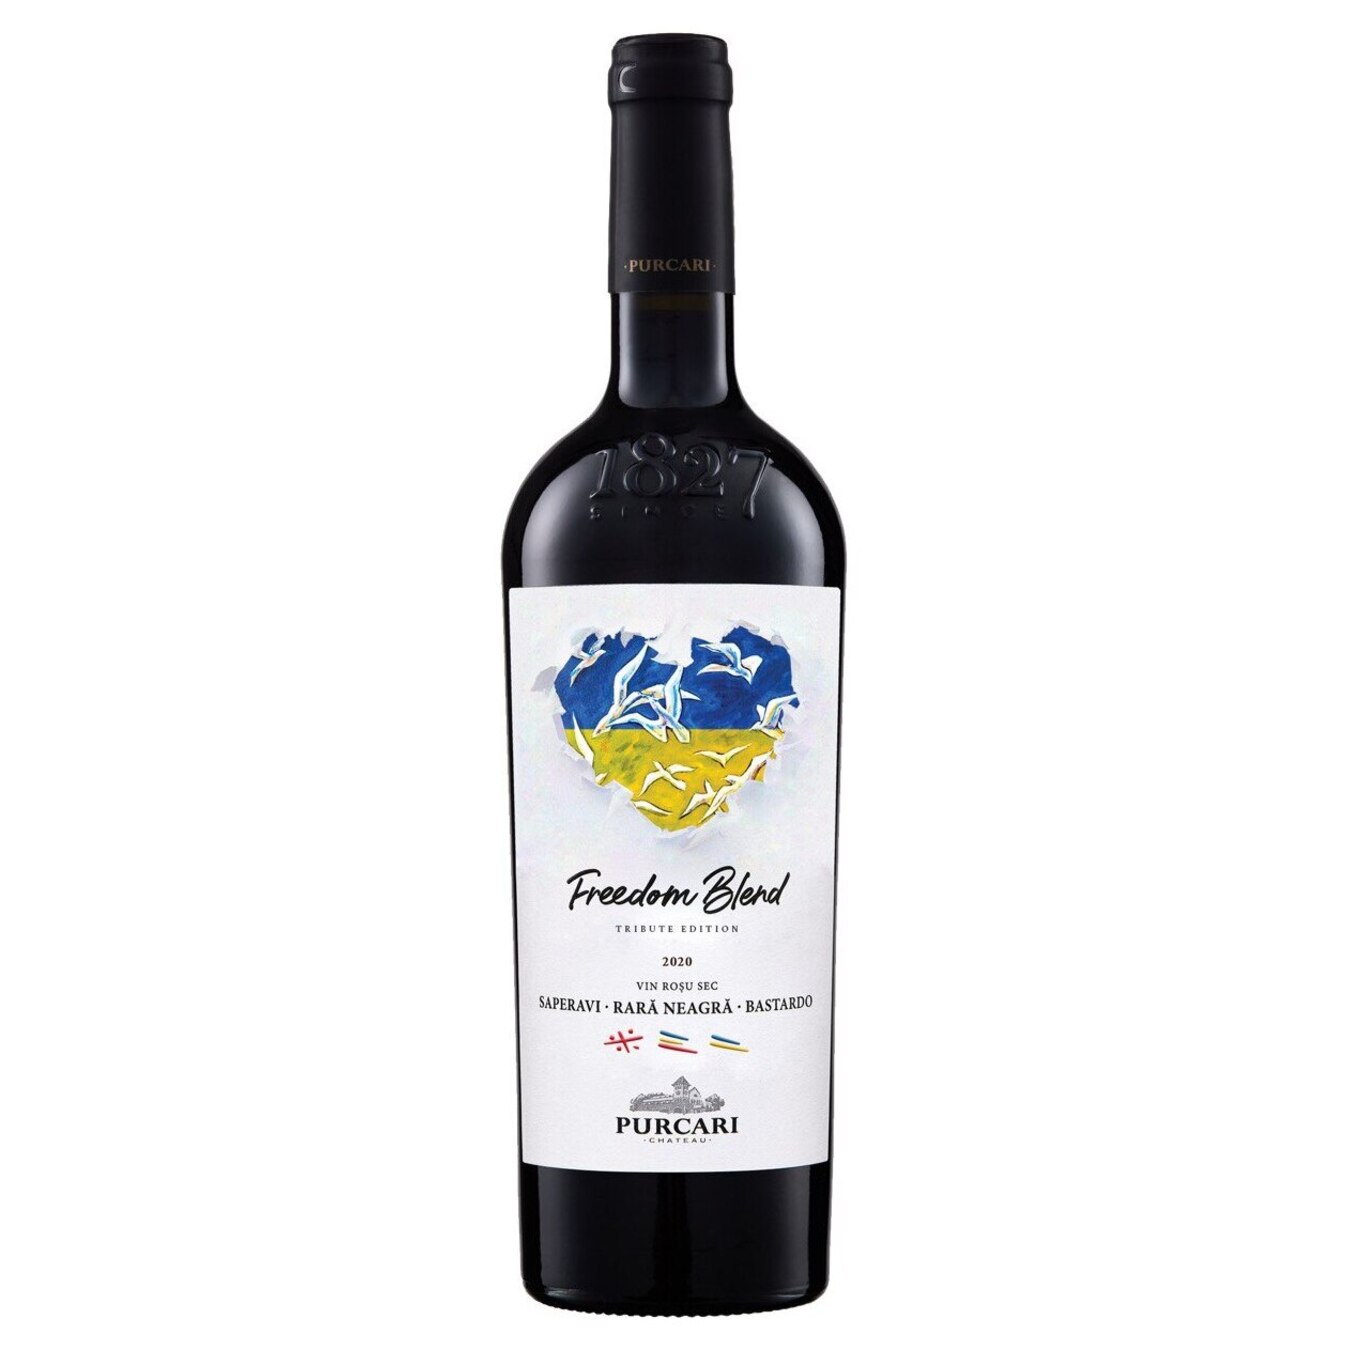 Вино Purcari Freedom Blend витримане червоне сухе 14% 0,75л